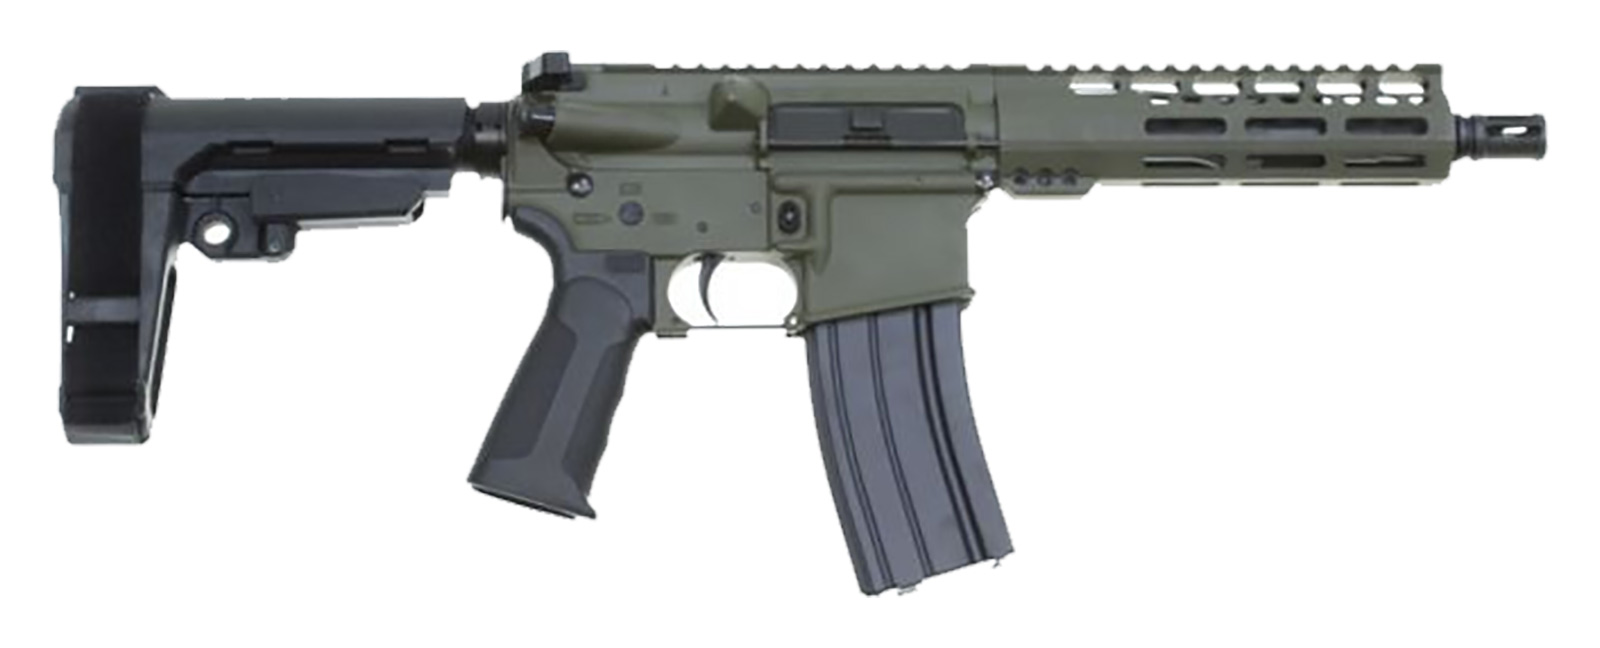 cbc-ps2-forged-aluminum-ar-pistol-od-green-5-56-nato-7-5-barrel-7-m-lok-rail-sb3-brace